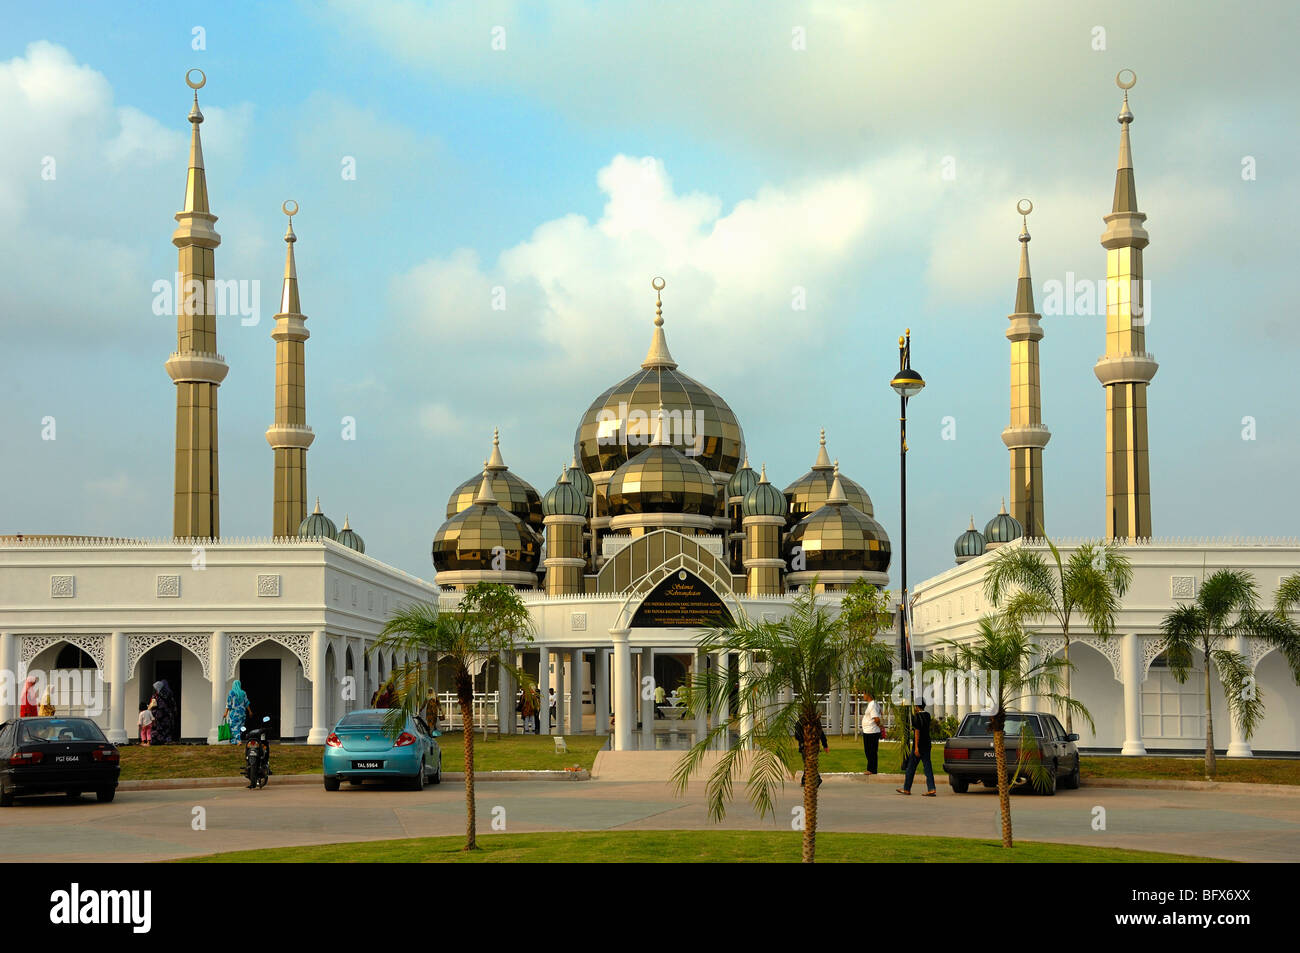 Main Entrance Minarets & Domes of the Transparent All-Glass Crystal Mosque (2006-2008) or Masjid Kristal, Kuala Terengganu, Malaysia Stock Photo